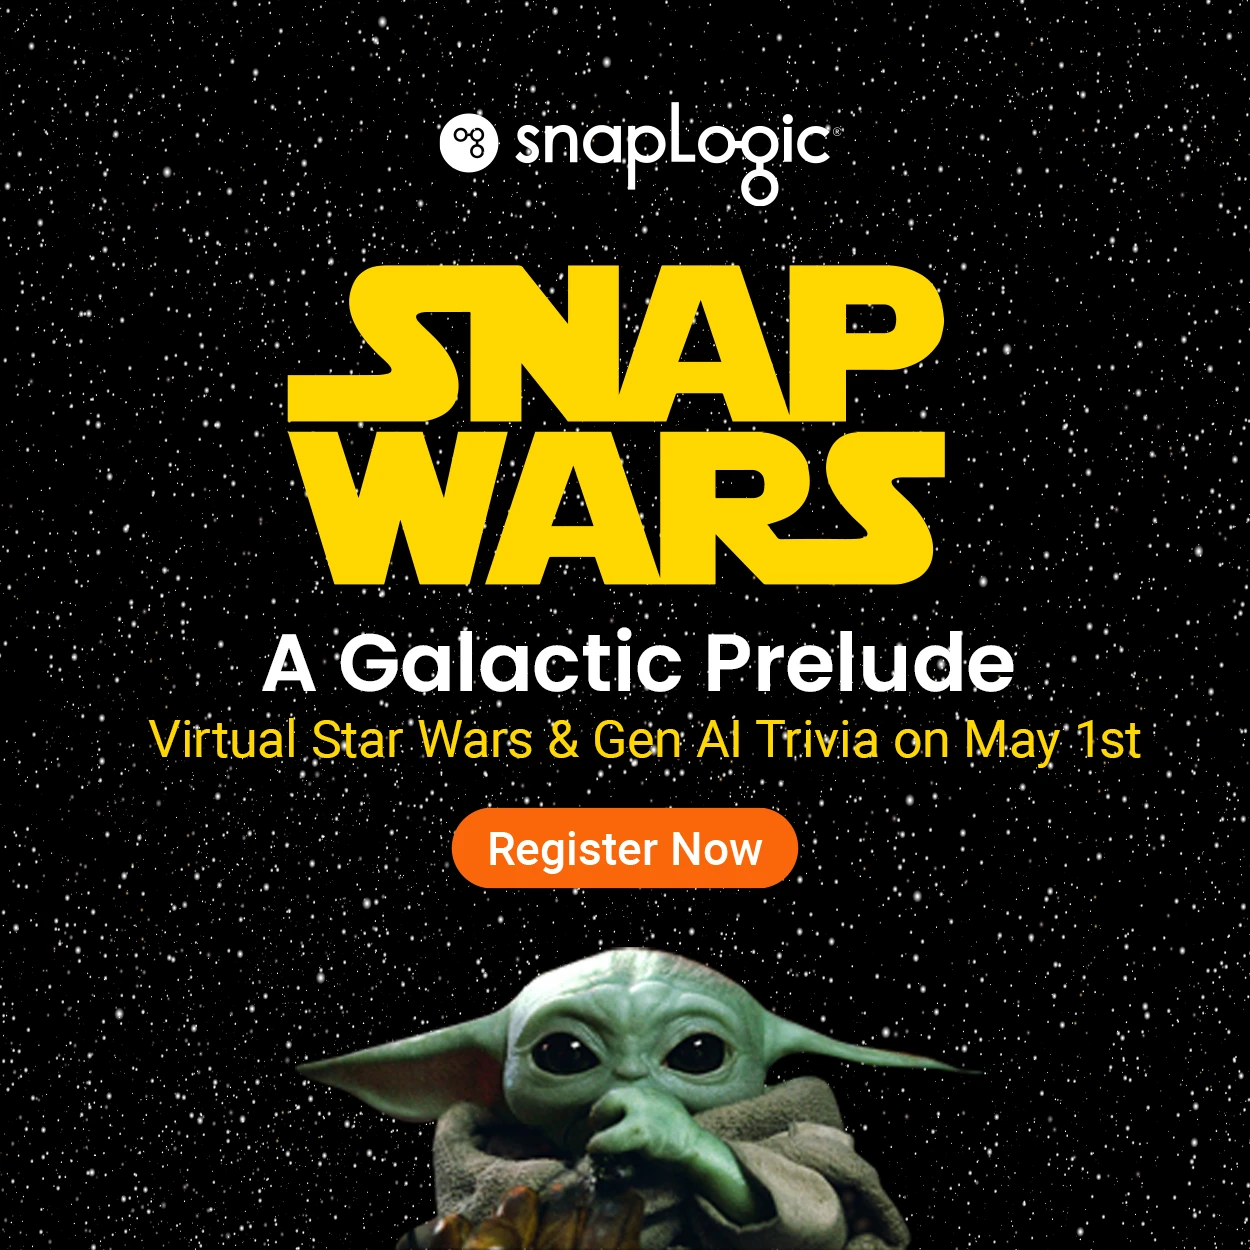 SnapWars Un prélude galactique : Star Wars virtuel et Gen AI Trivia le 1er mai